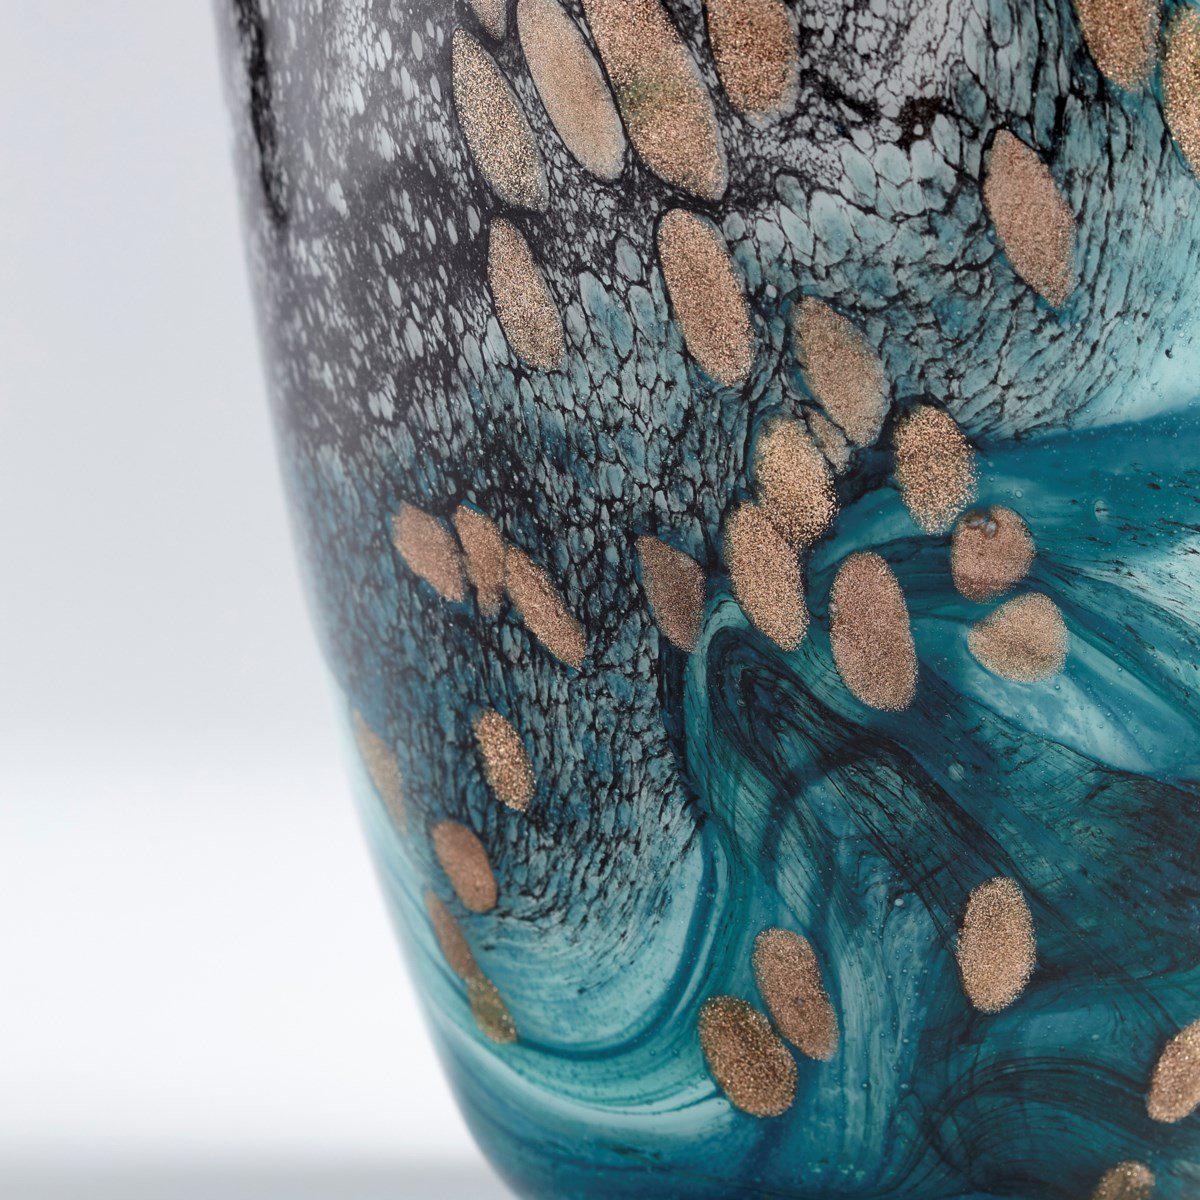 Prismatic Vase-Cyan-Vases-Artistic Elements